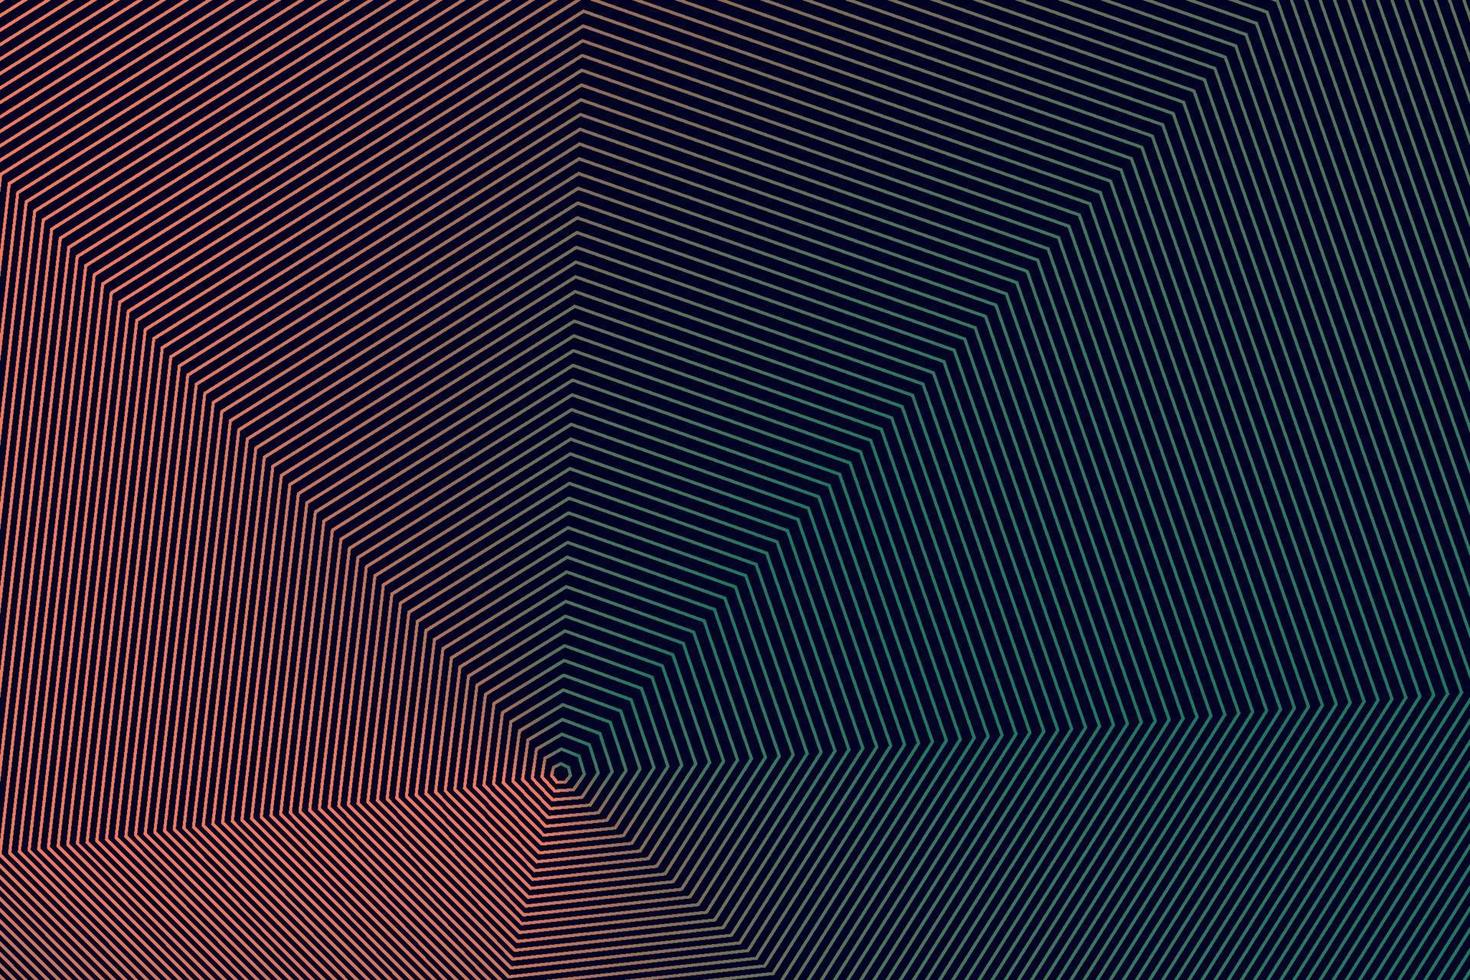 minimalista meio-tom gradiente linhas decorativo fundo. abstrato ilustração Projeto dentro geométrico estilo vetor